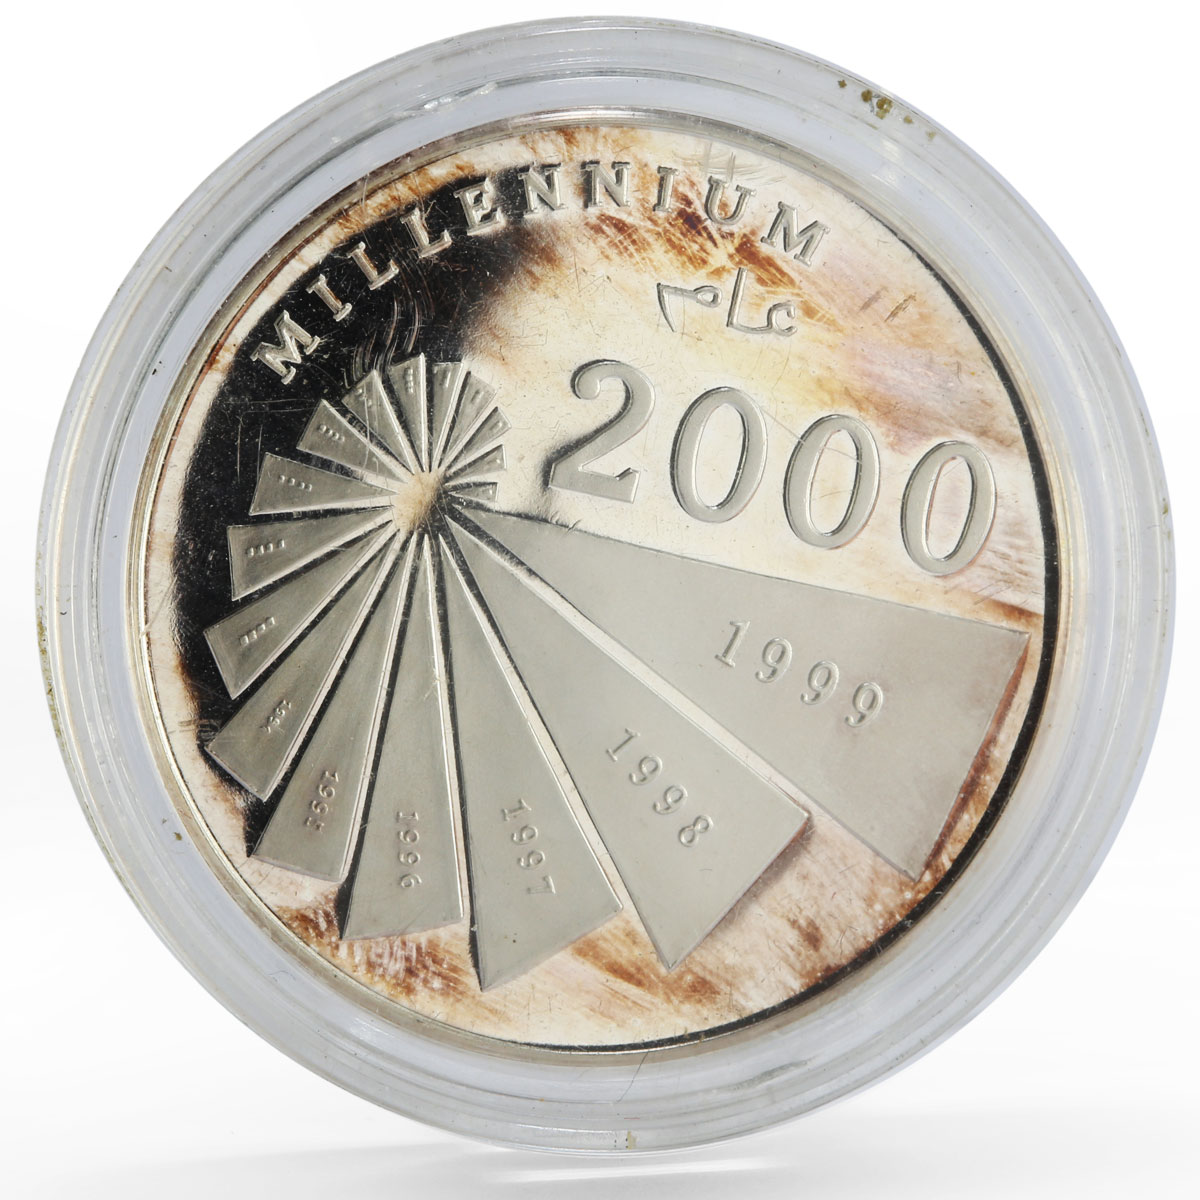 Sahrawi 1000 pesetas Millennium proof silver coin 2000